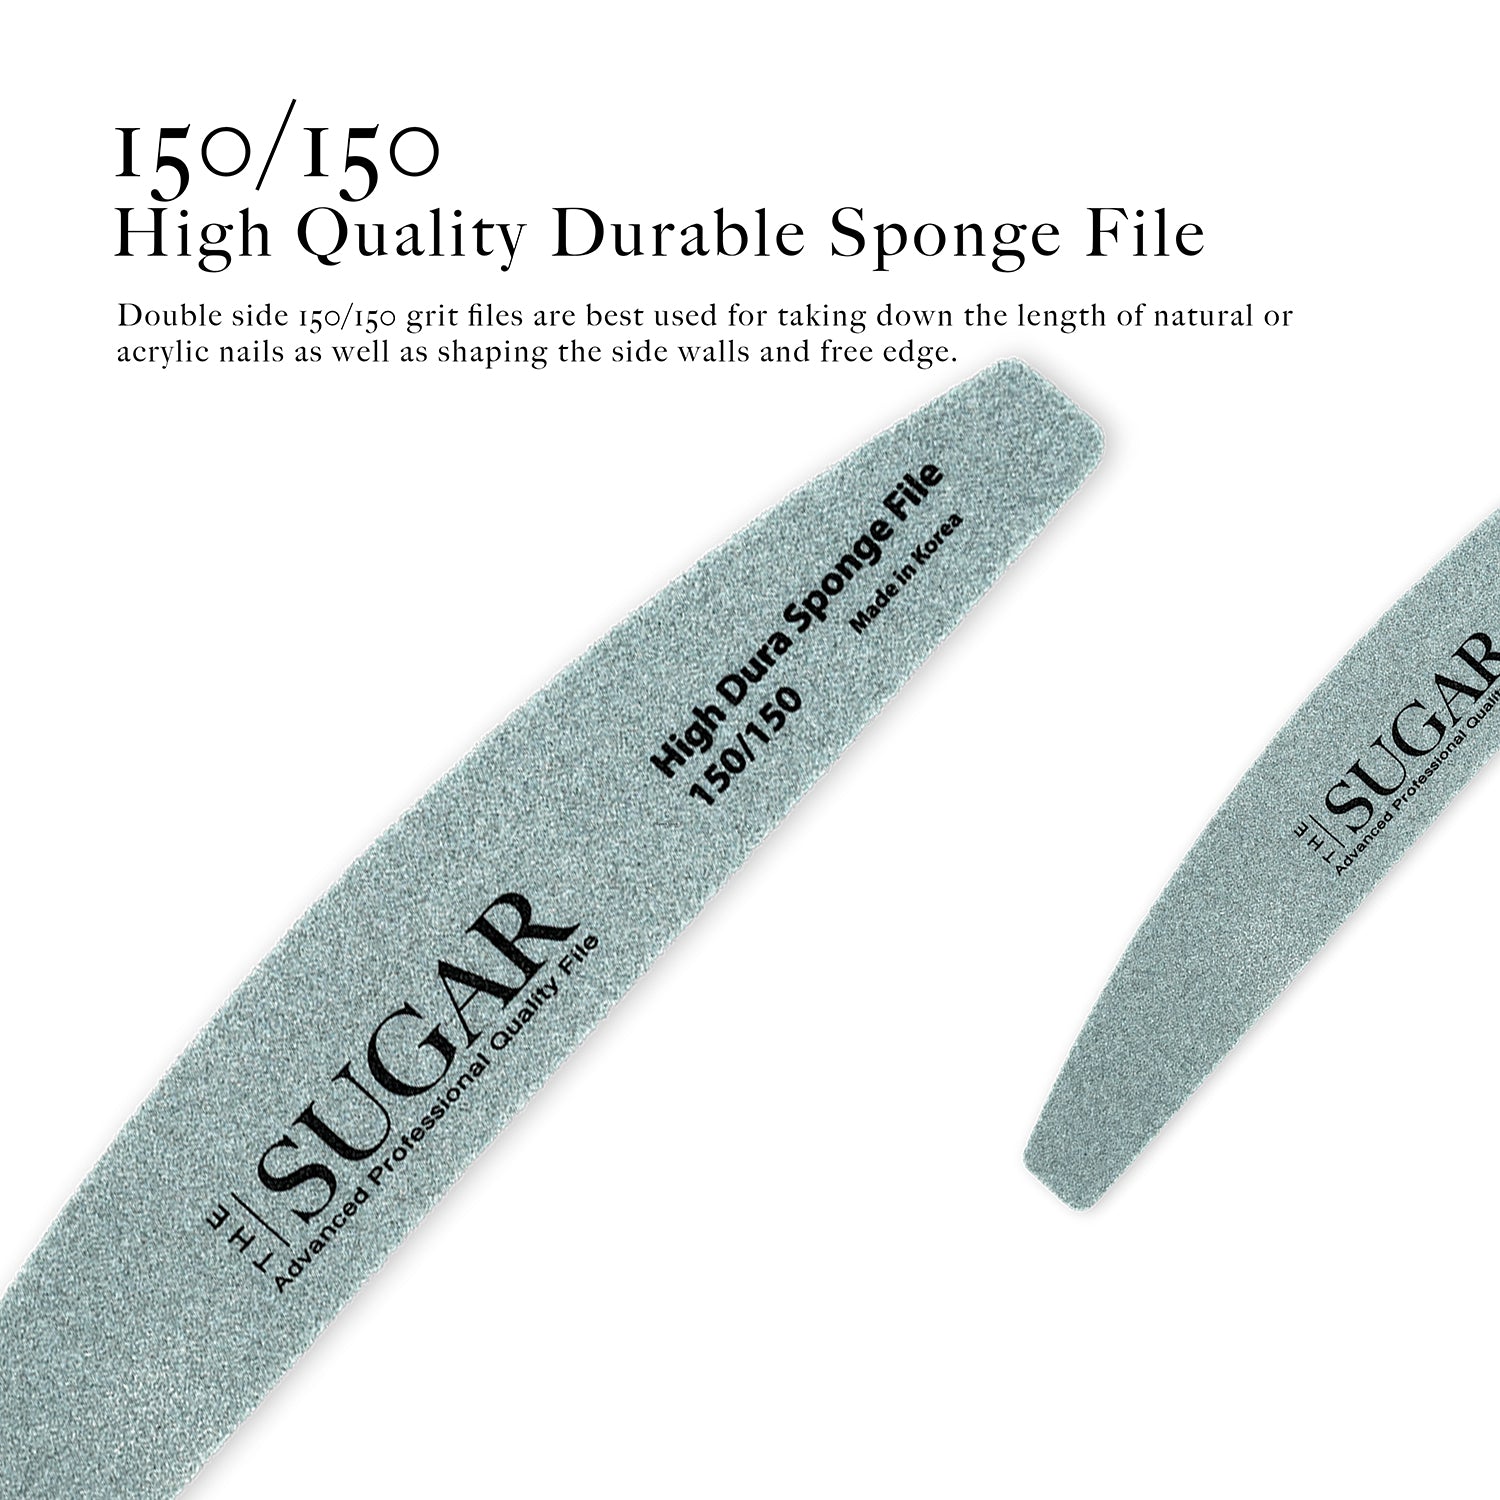 4pcs of washable Double Side Half Moon 150/150 sponge nail file from Skynailbysugar